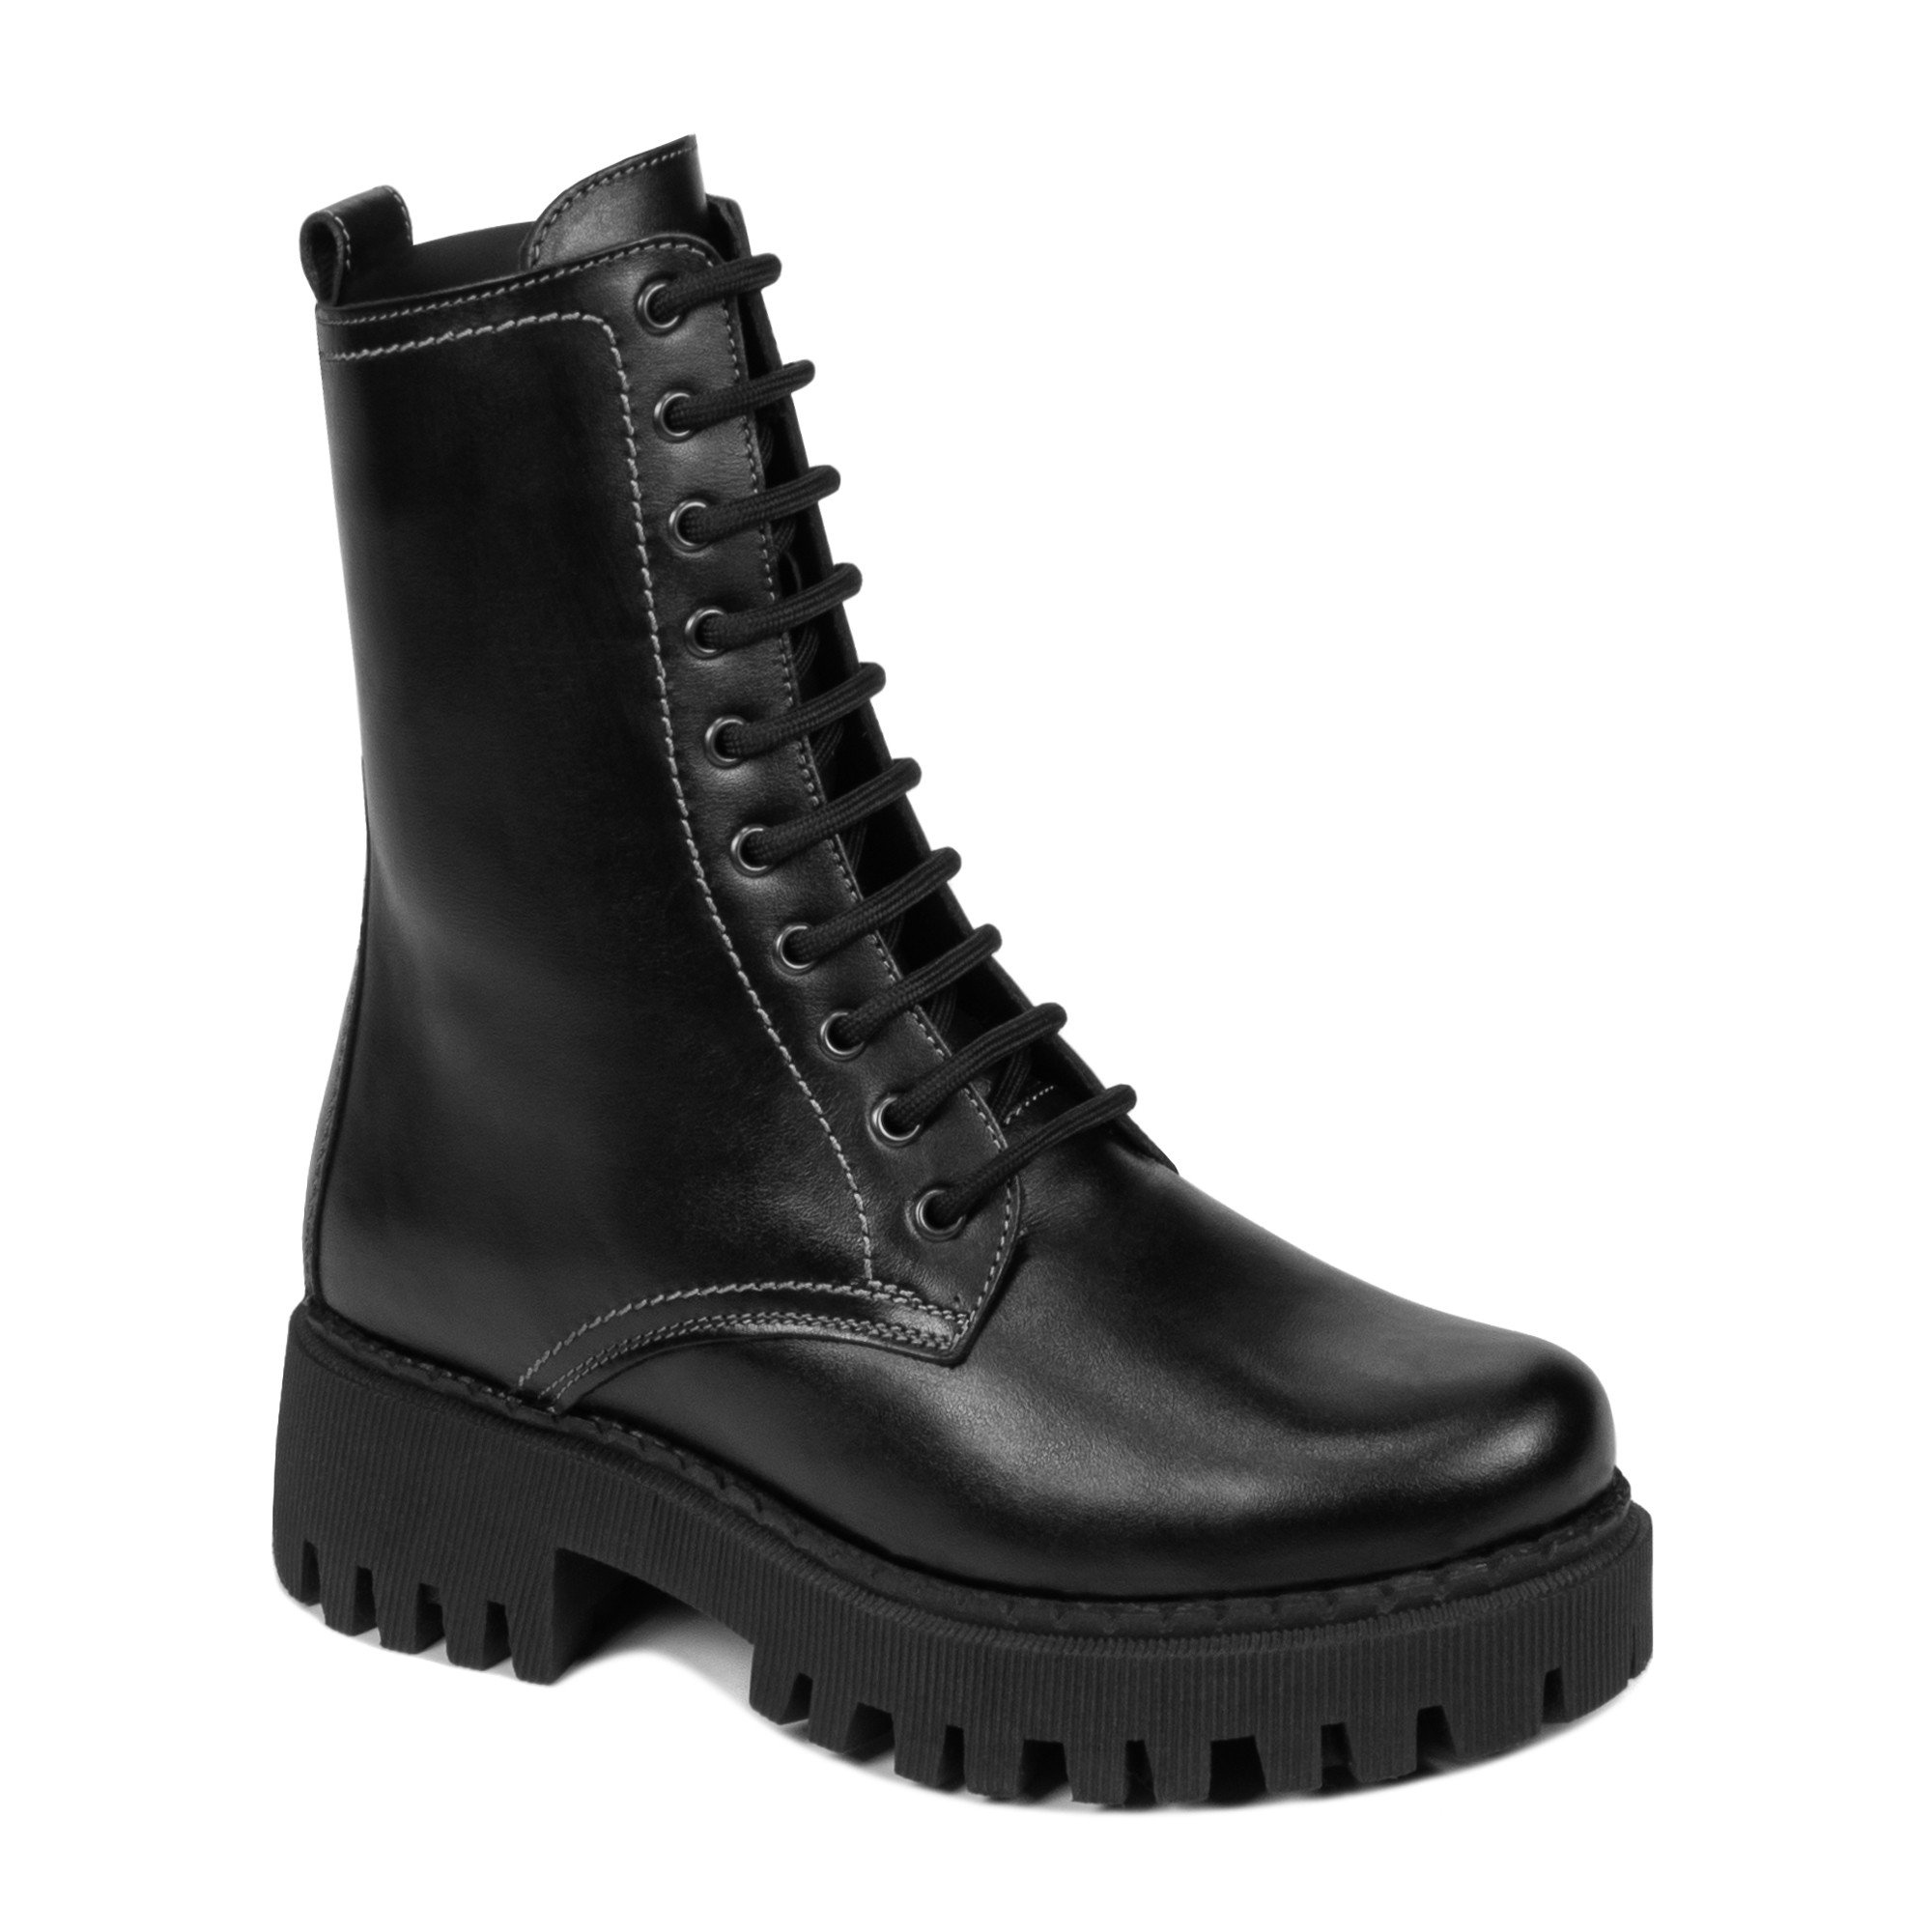 Women boots 3375-1 black price 329 lei - Marelbo